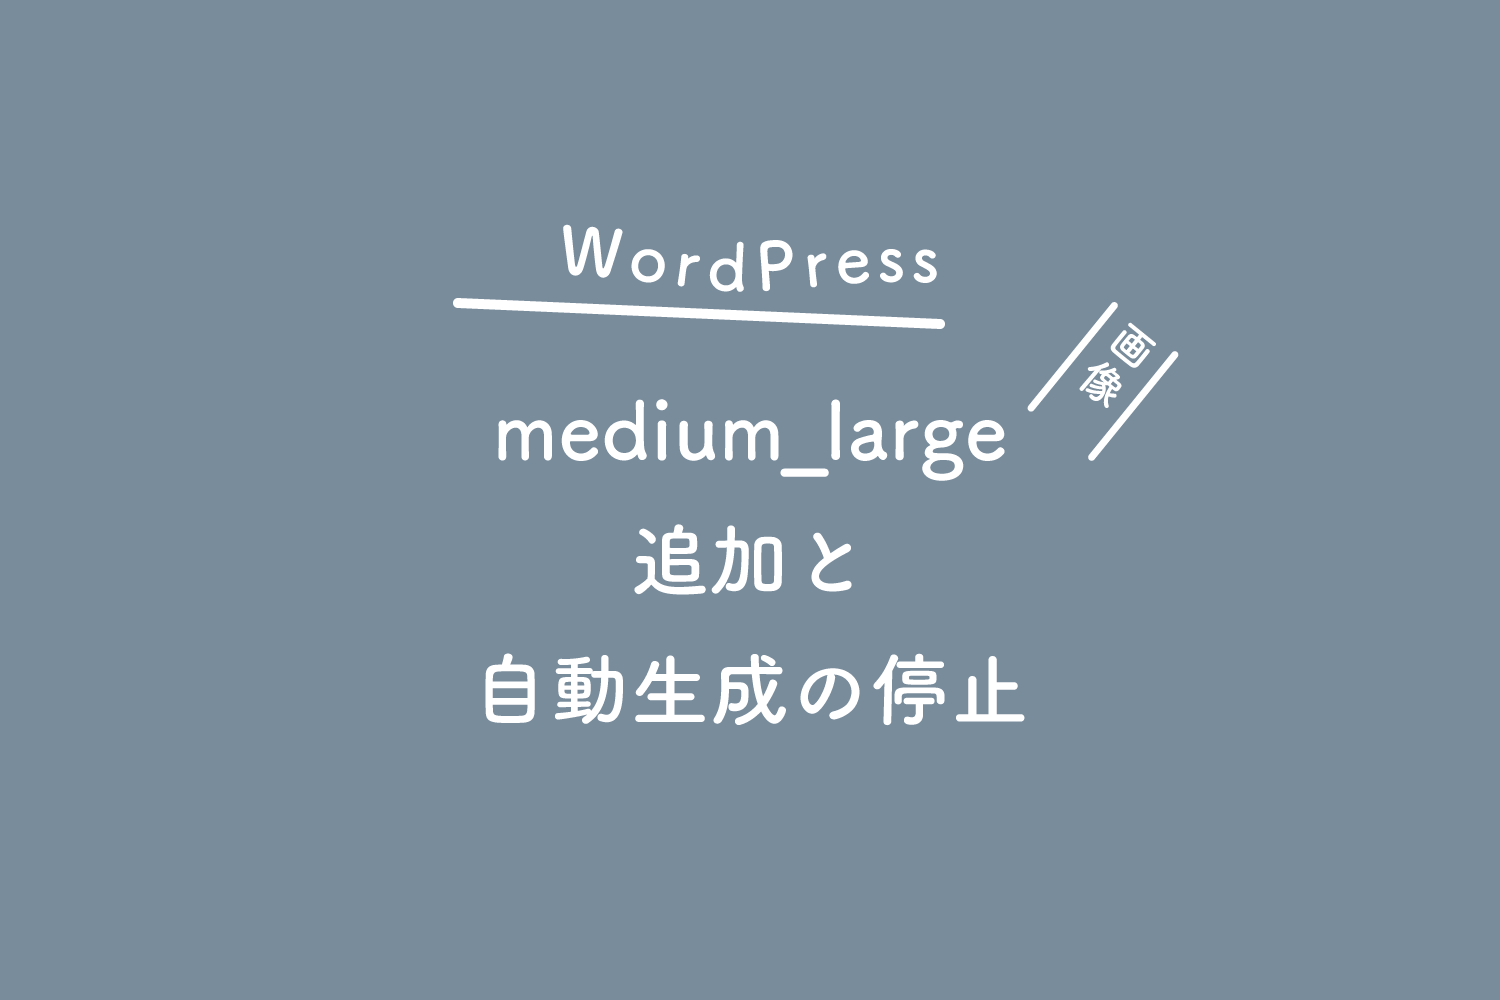 【WordPress】medium_largeサイズの画像の追加と自動生成の停止